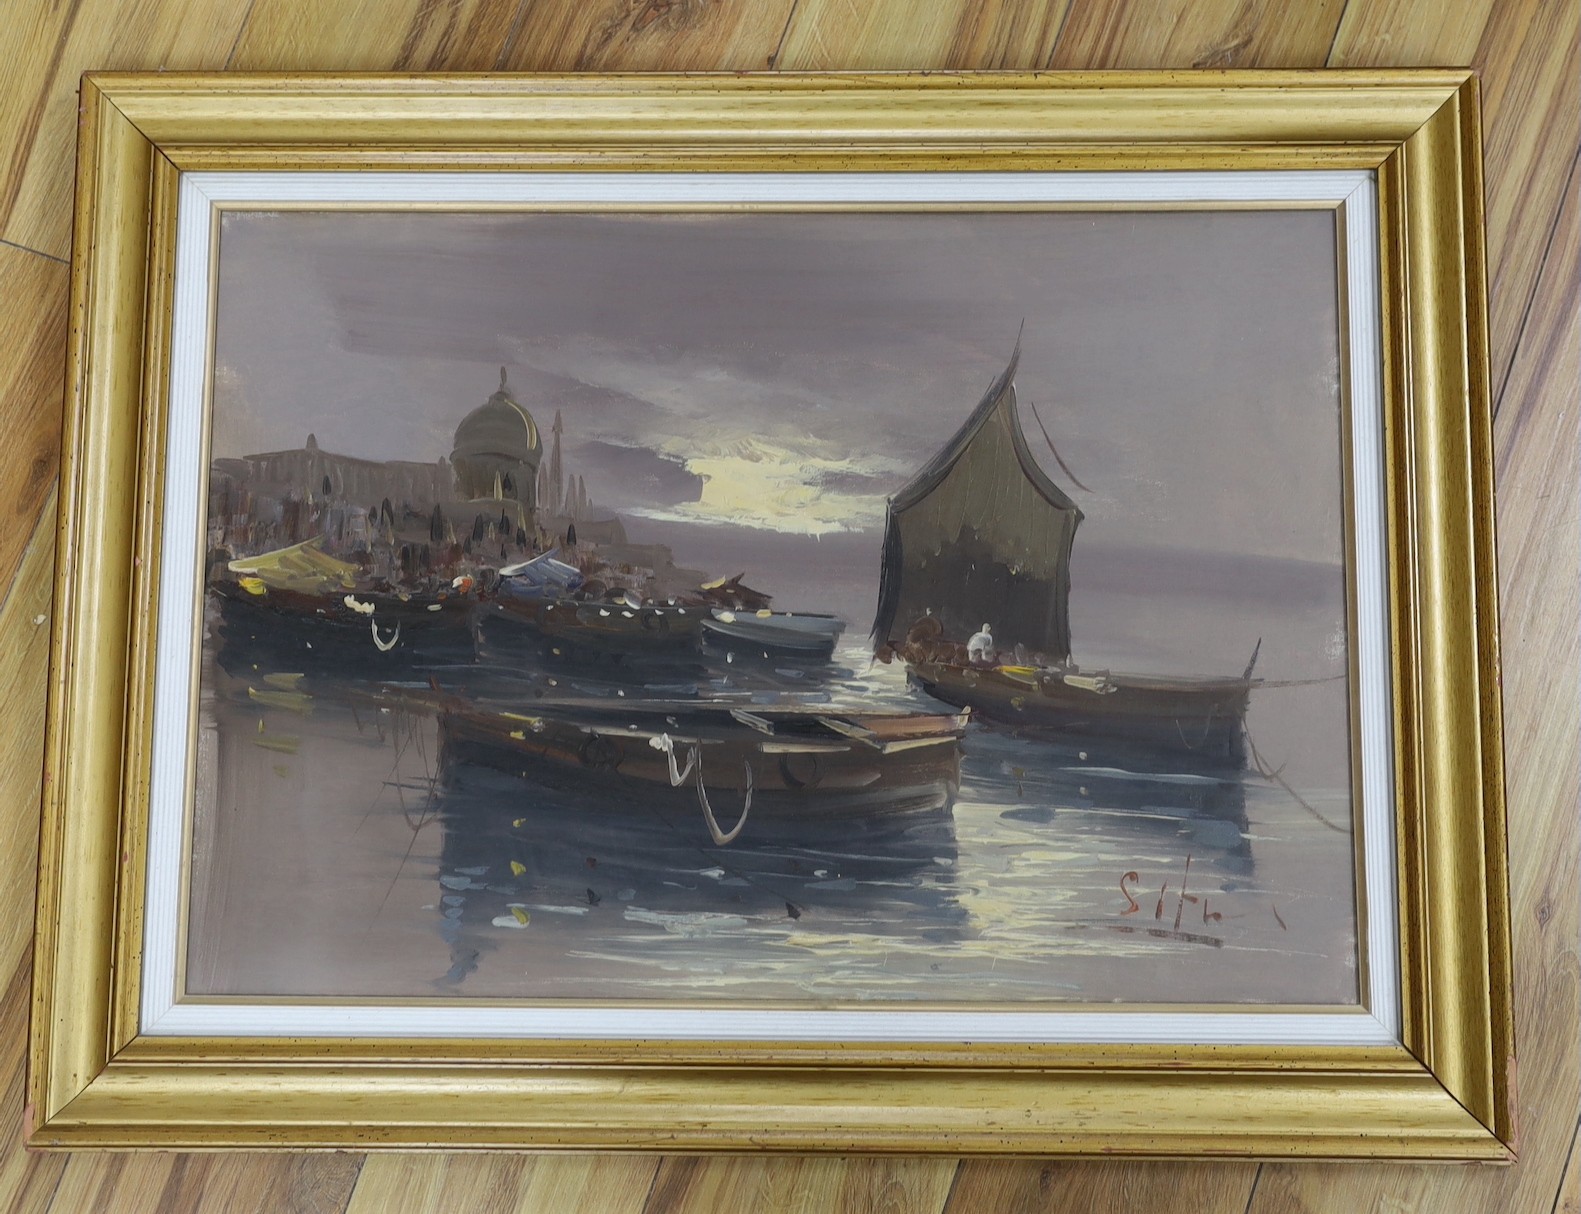 Situ, oil on canvas, Moored boats off the Italian coast, signed, 46 x 66cm